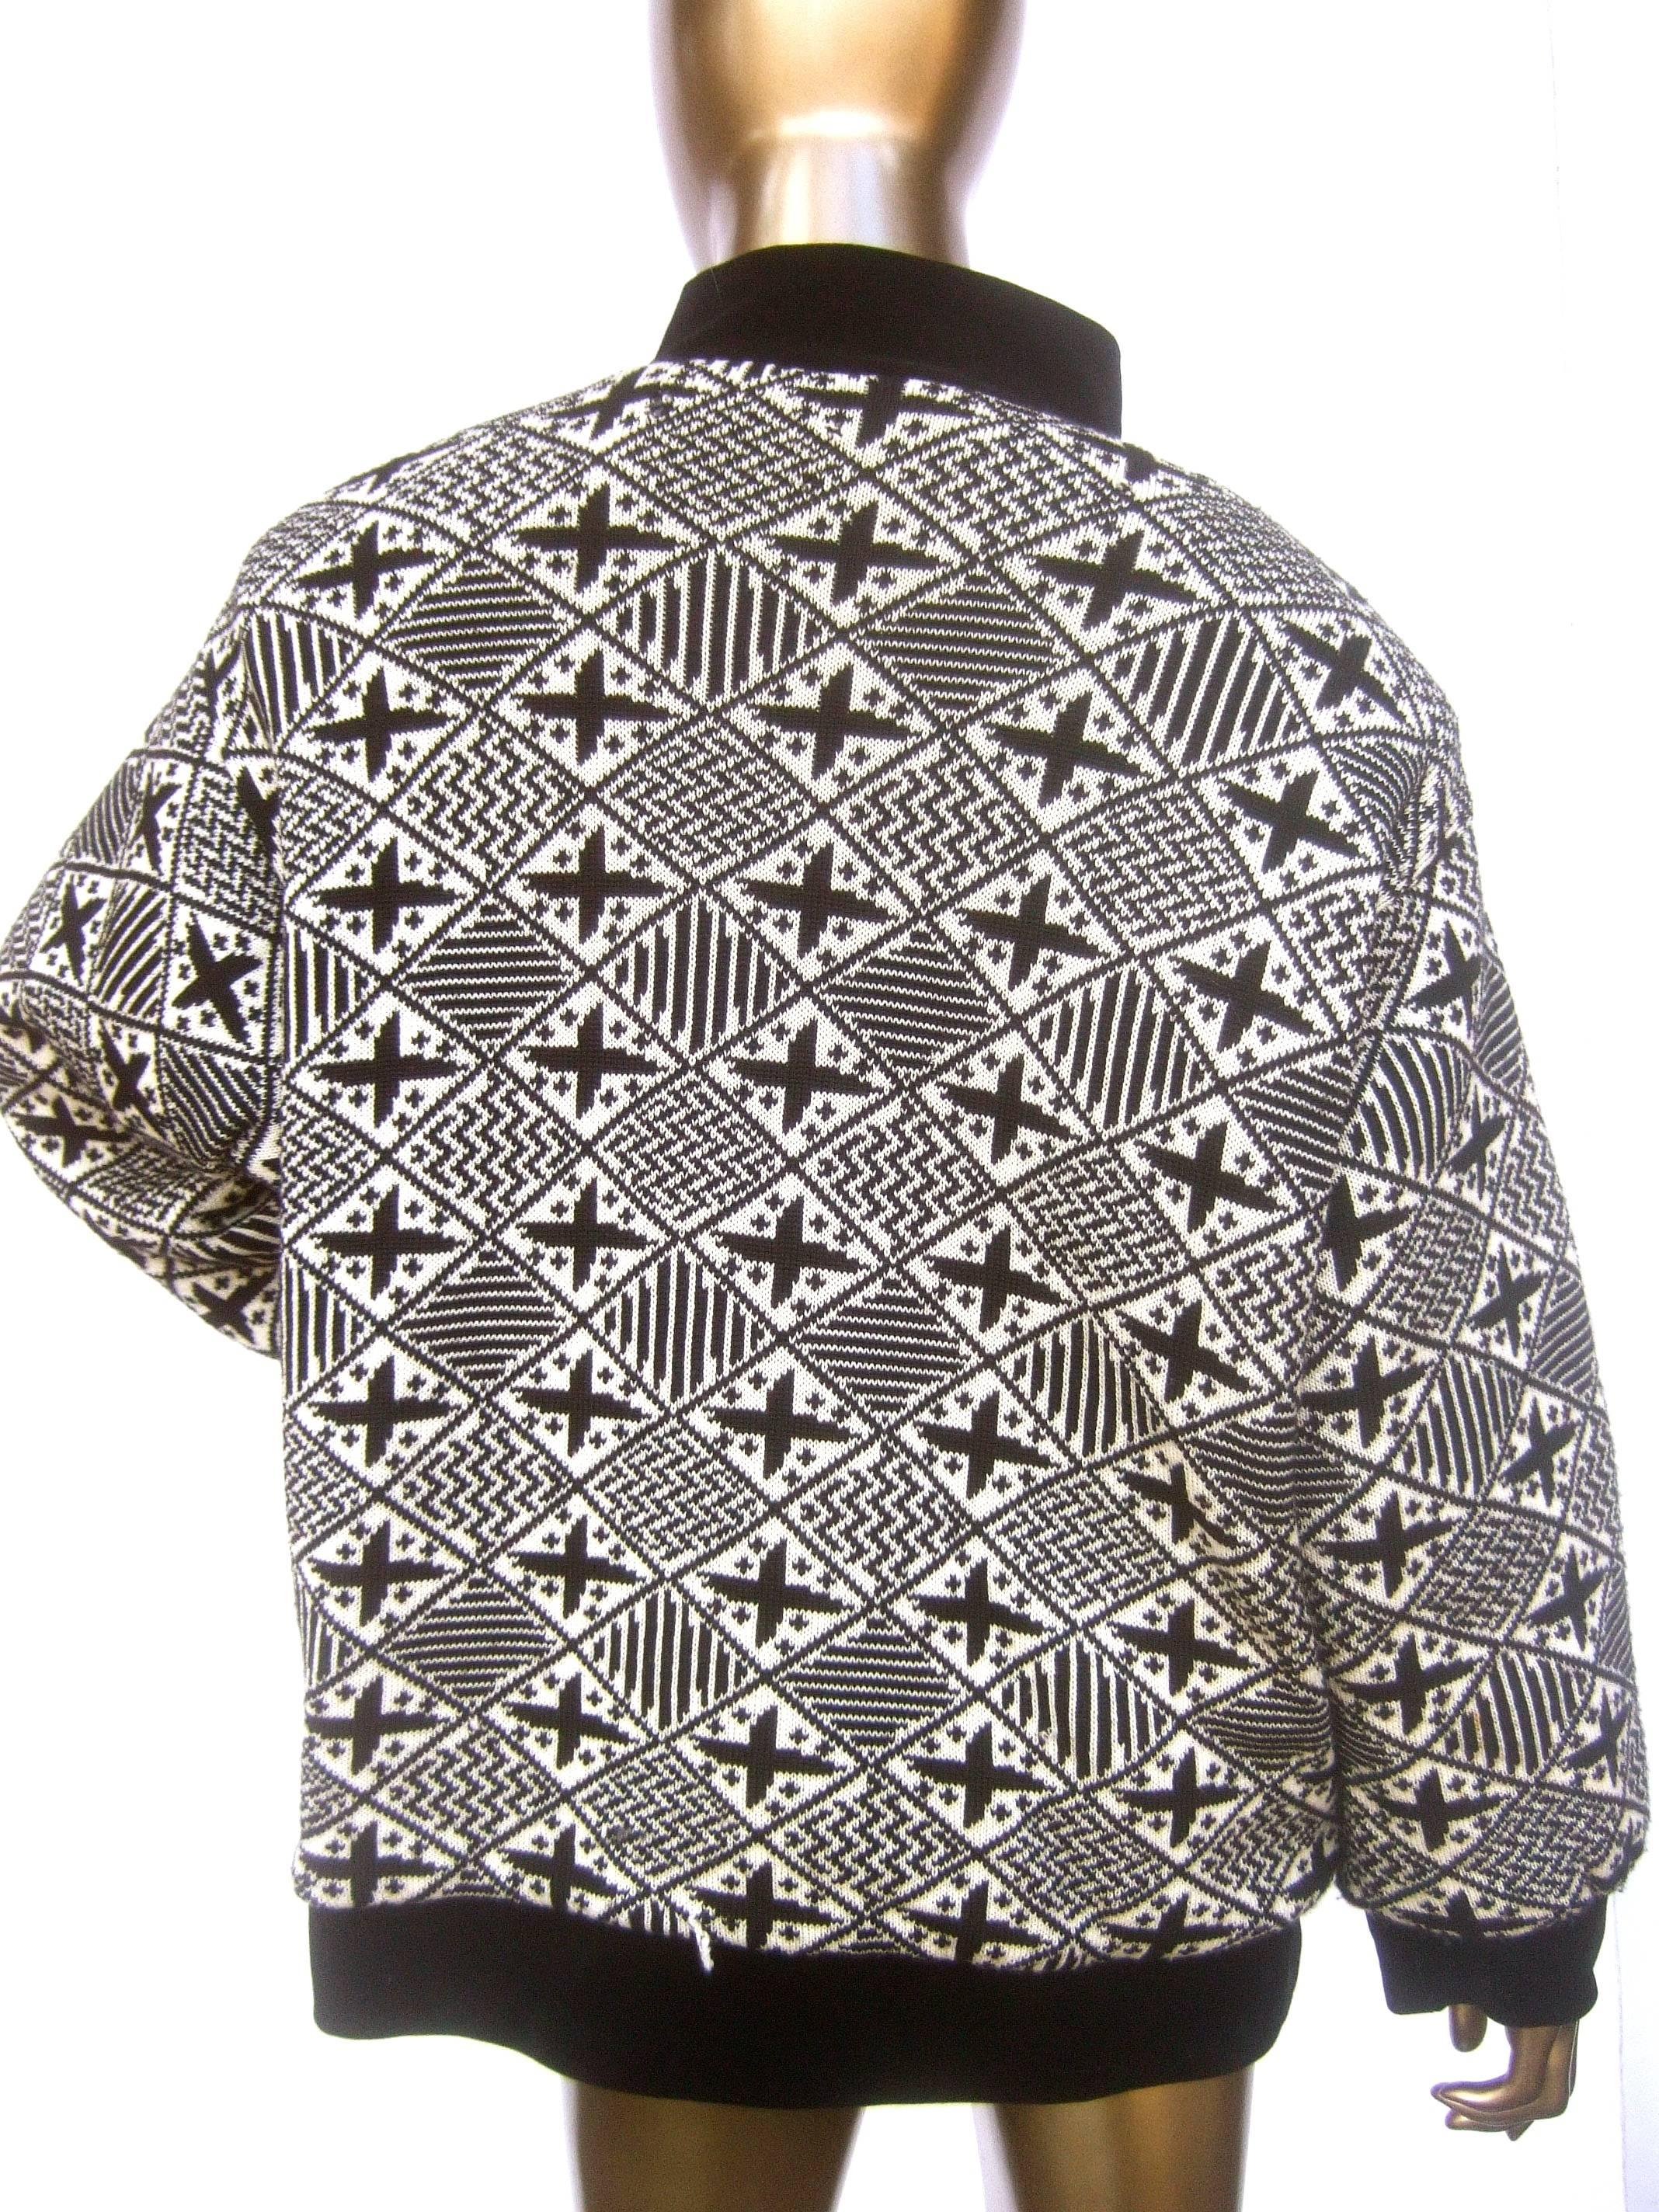 Yves Saint Laurent Rive Gauche Geometric Wool Knit Boxy Jacket circa 1970s  4